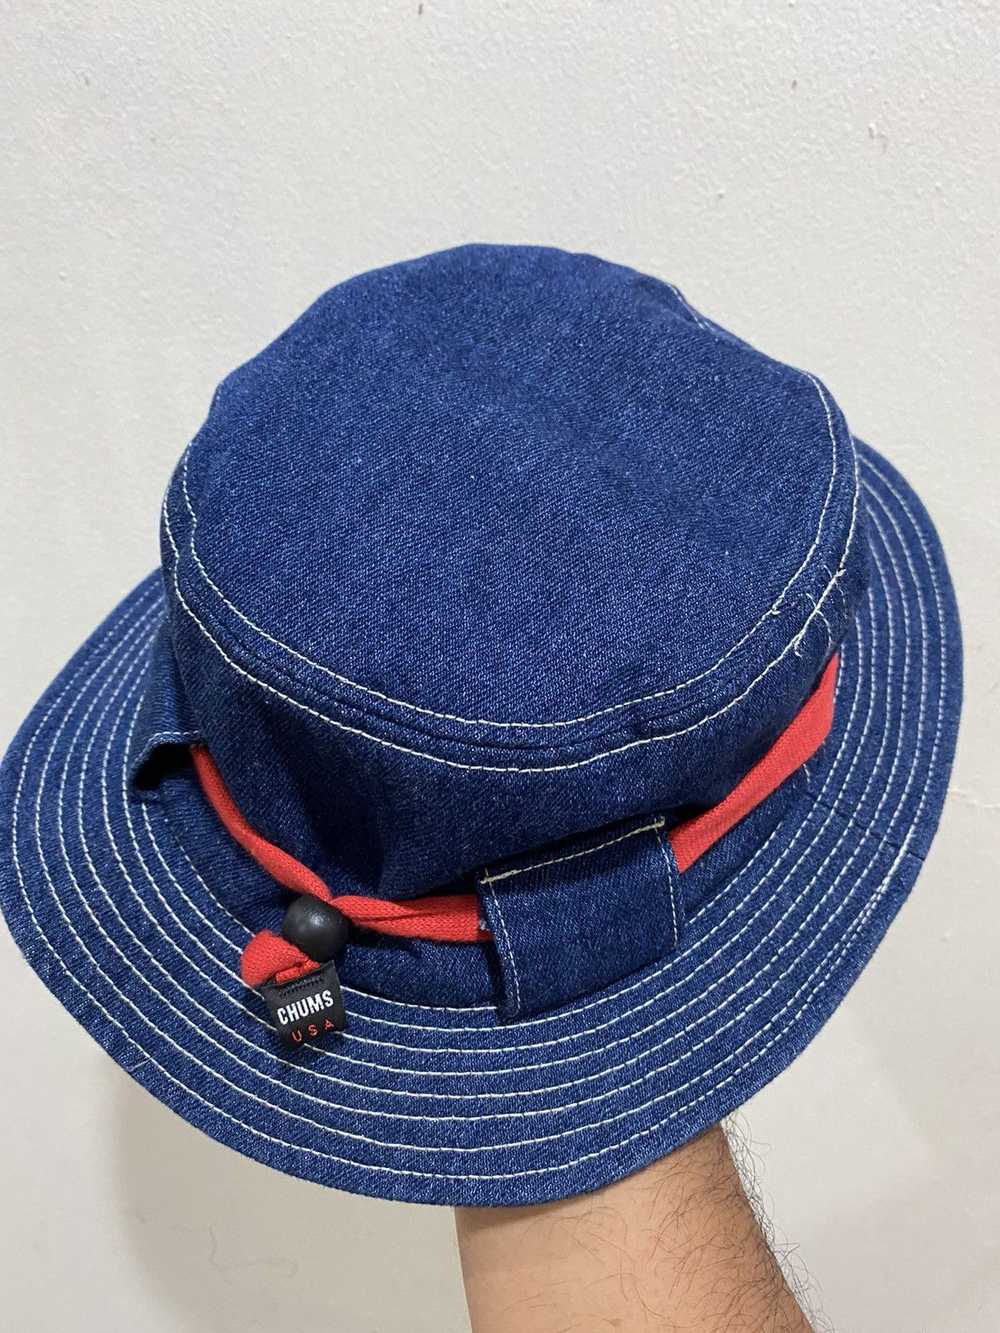 Chums × Vintage Chums Denim Outdoor Bucket Hat - image 5